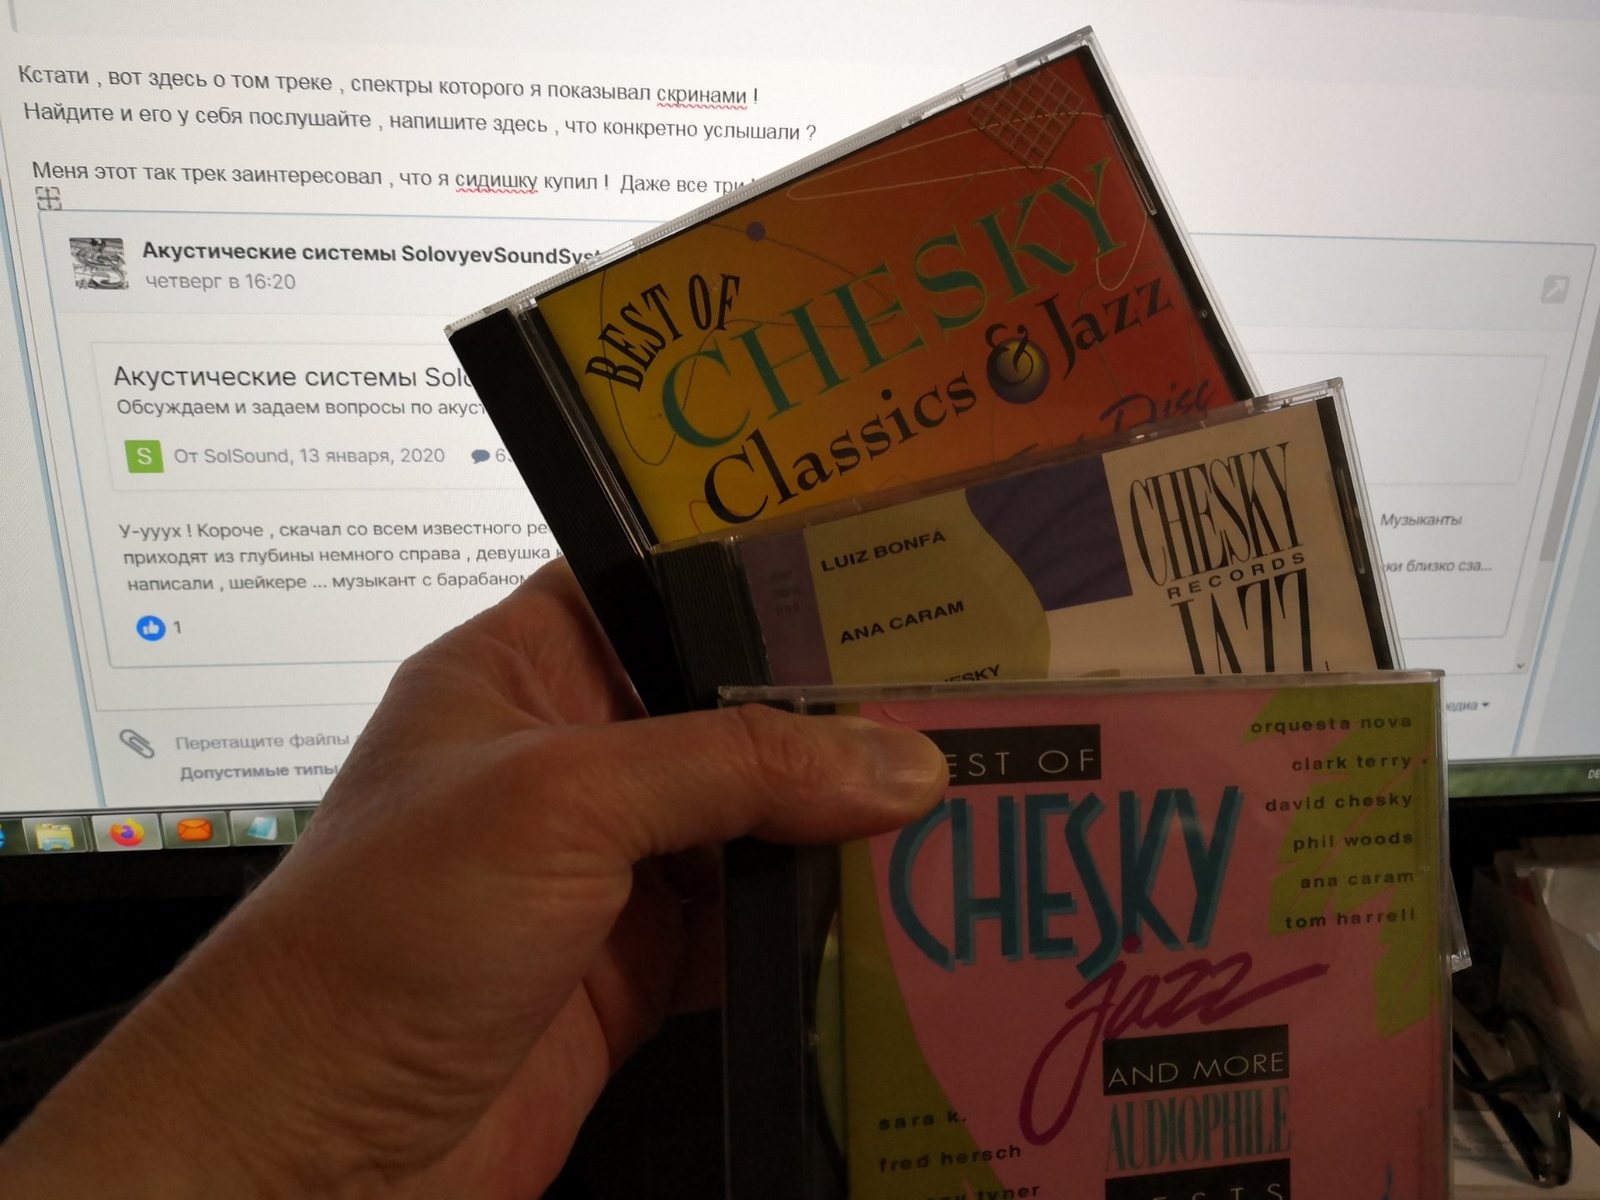 Chesky Test CD.jpg